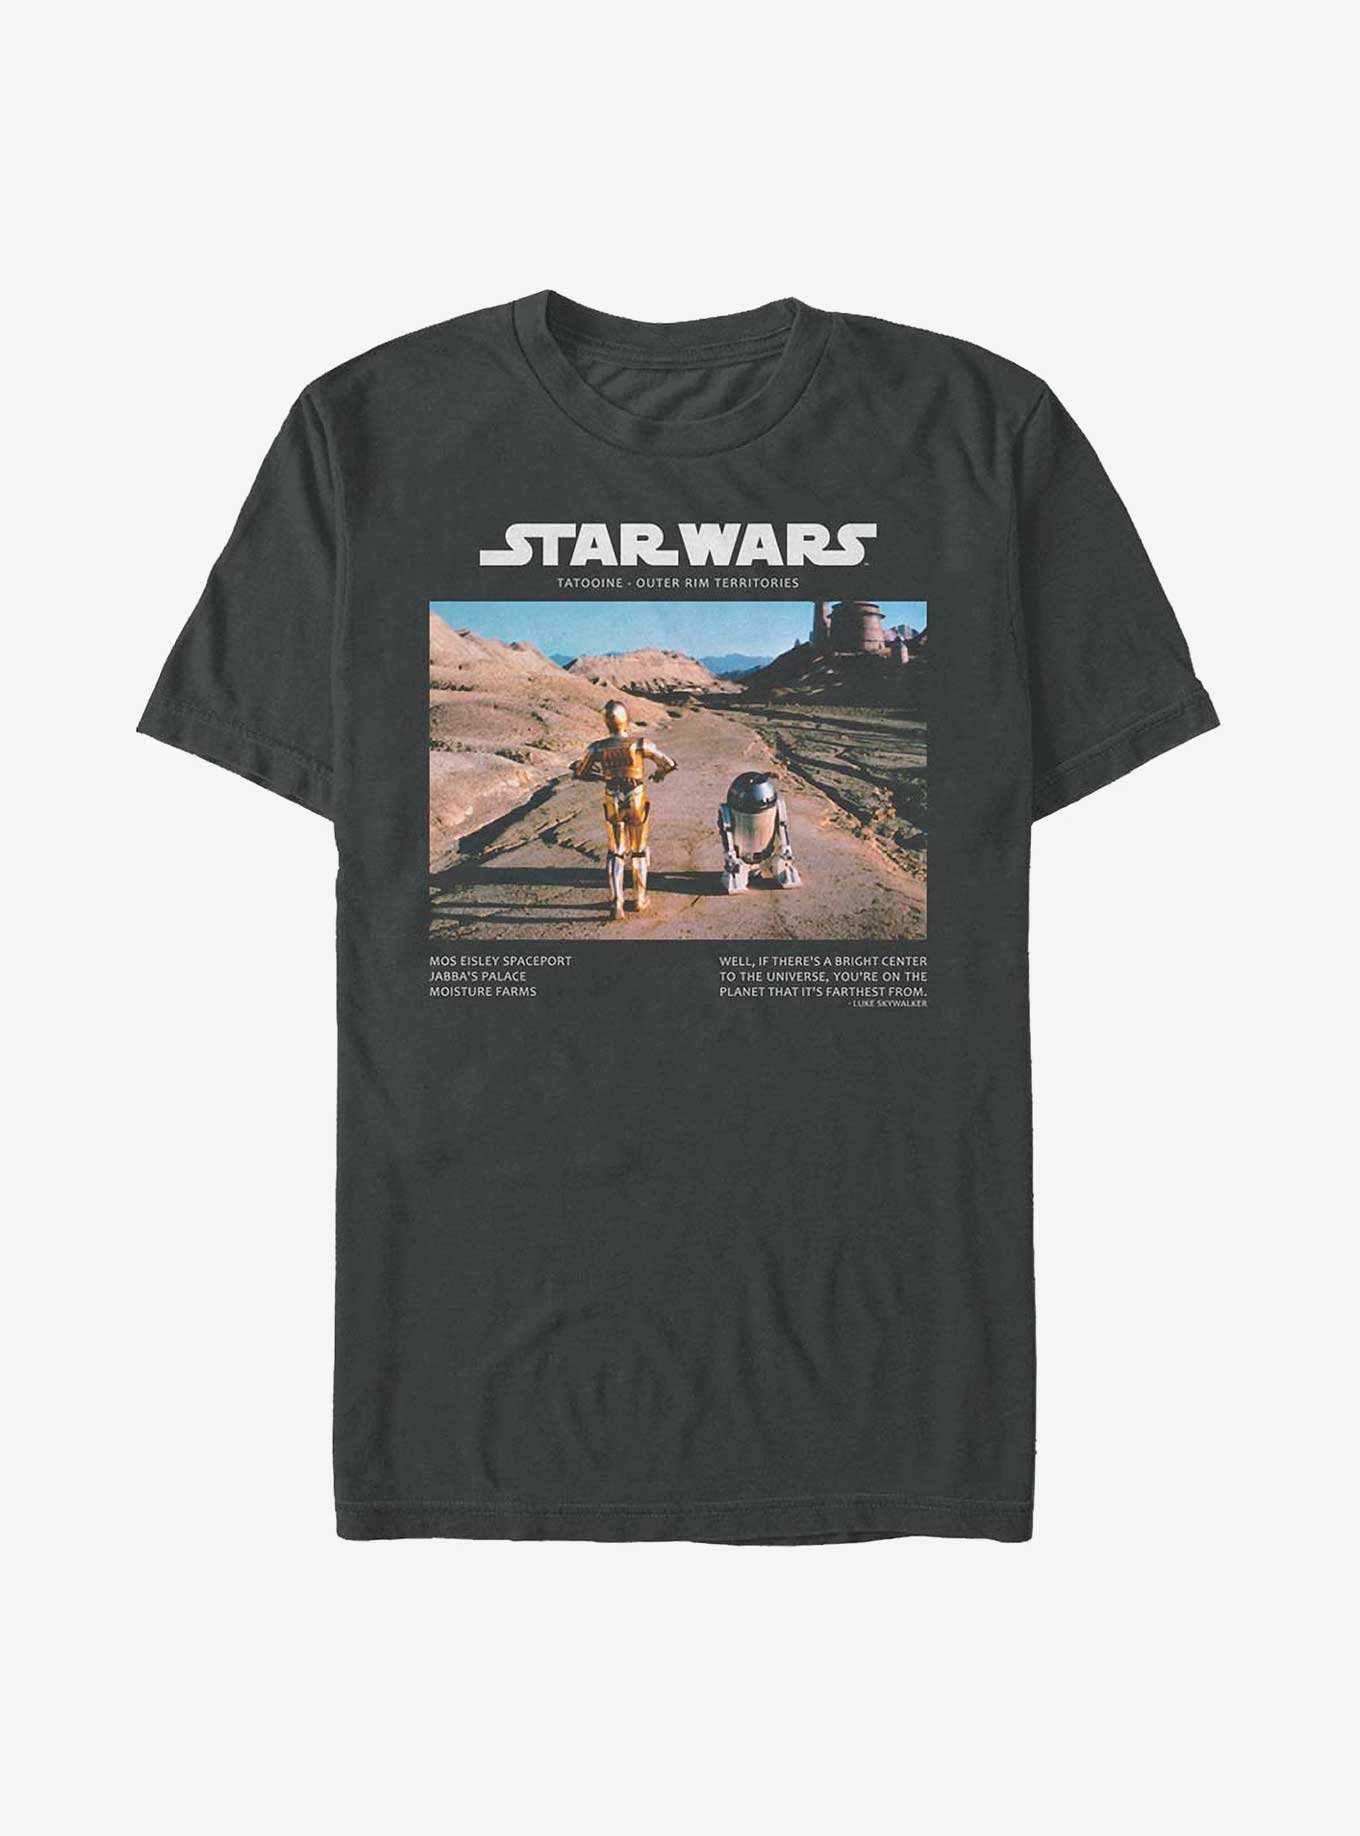 Star Wars Tatooine Travelers C-3PO and R2-D2 T-Shirt, , hi-res